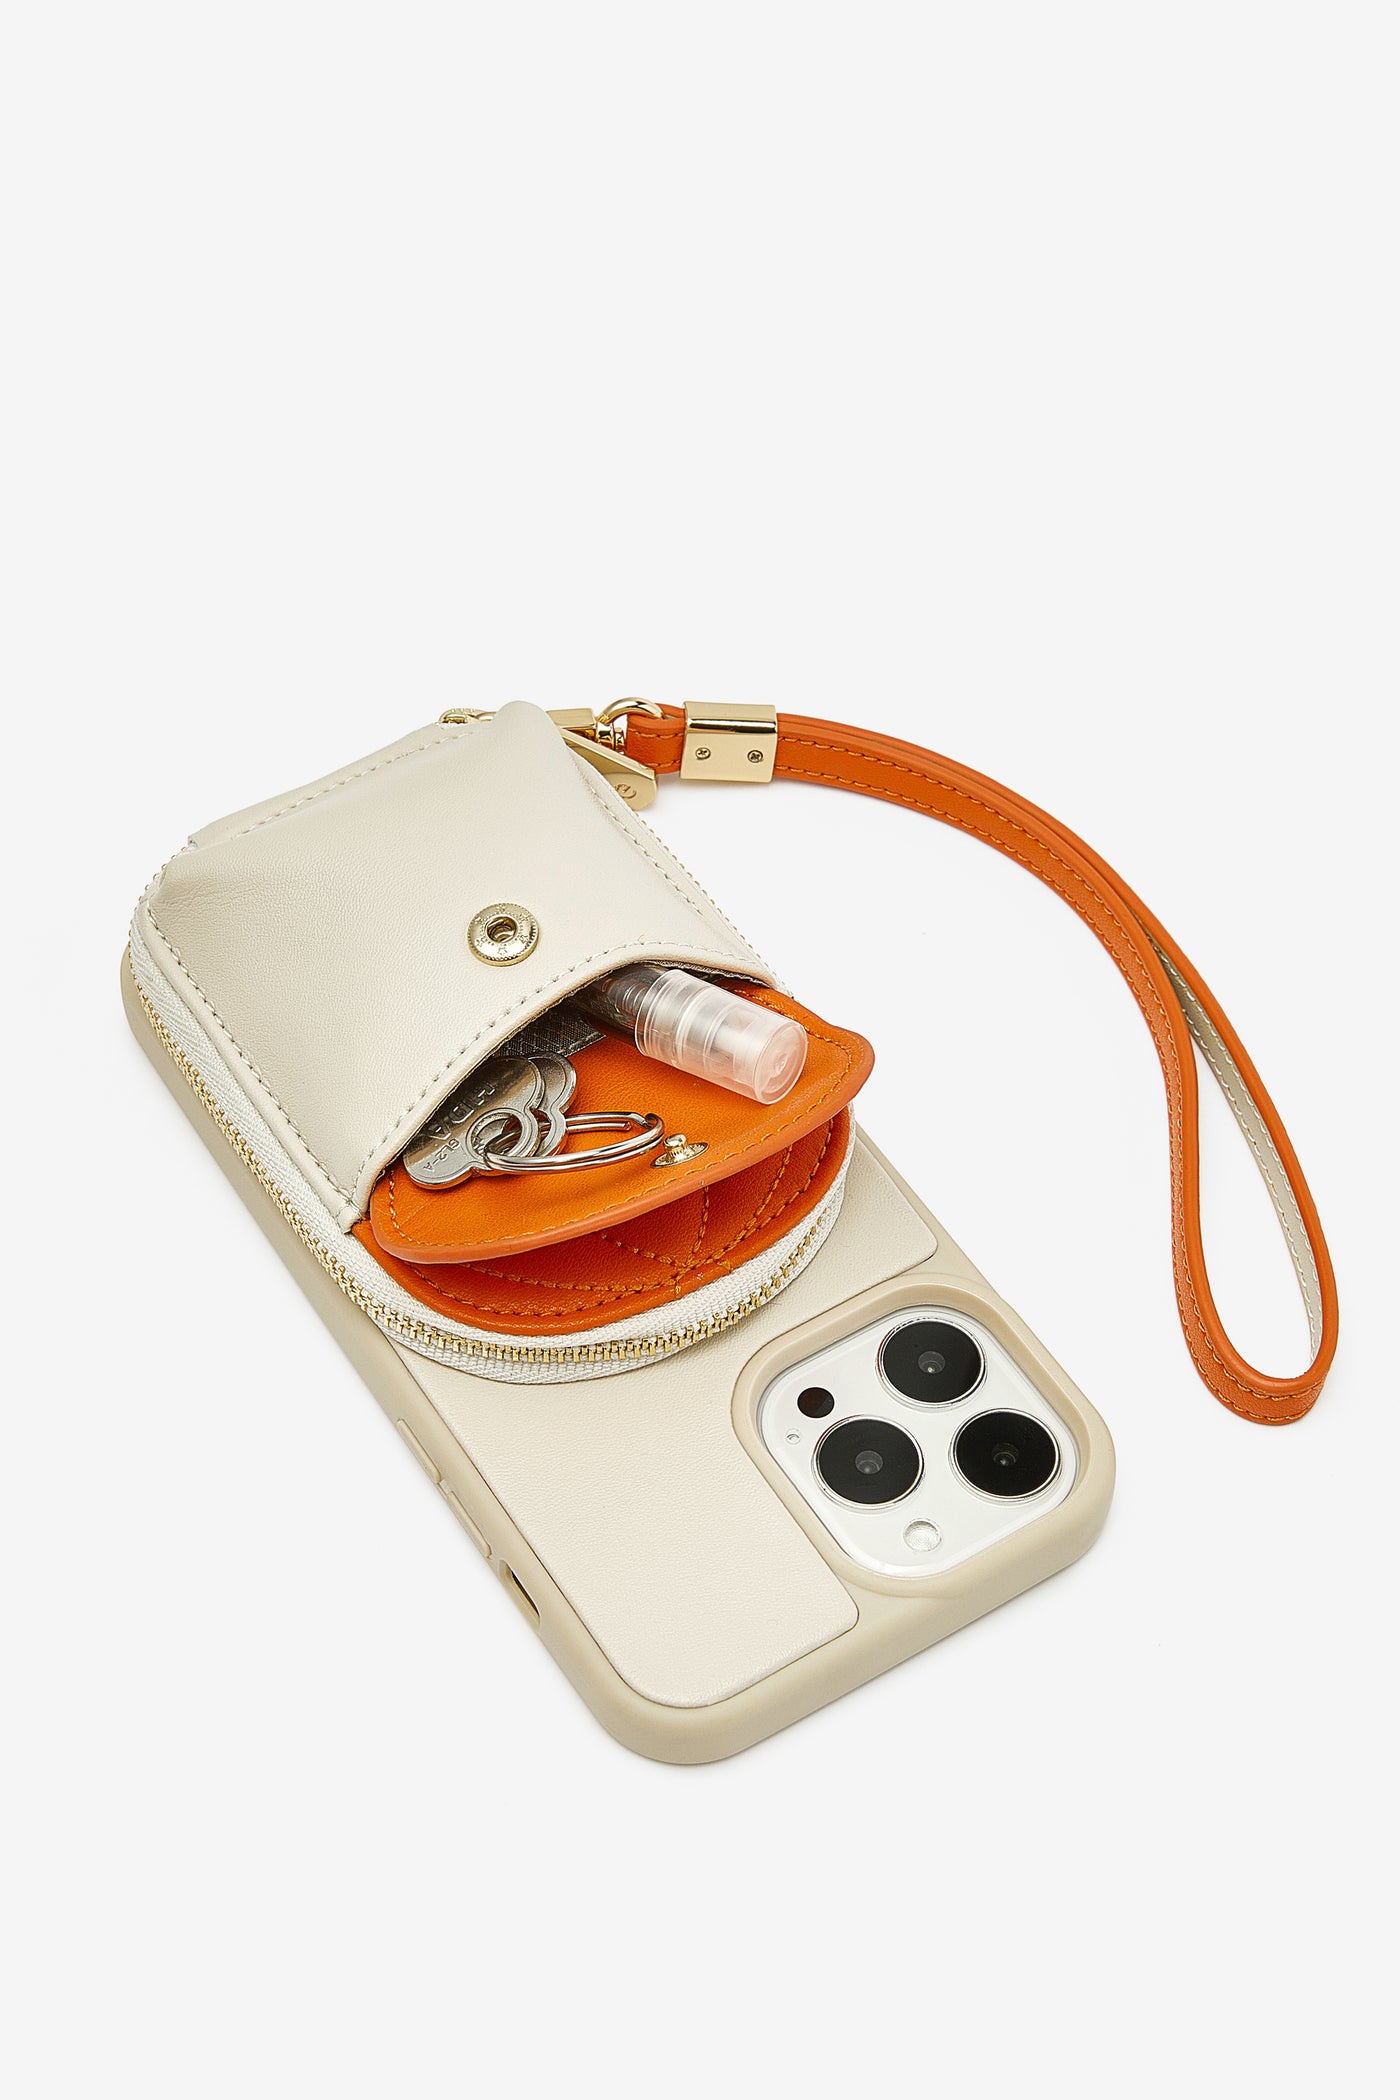 Unique Baseball Cap Phone Case iPhone Crossbody Cover Case Wallet Pouch orange-1